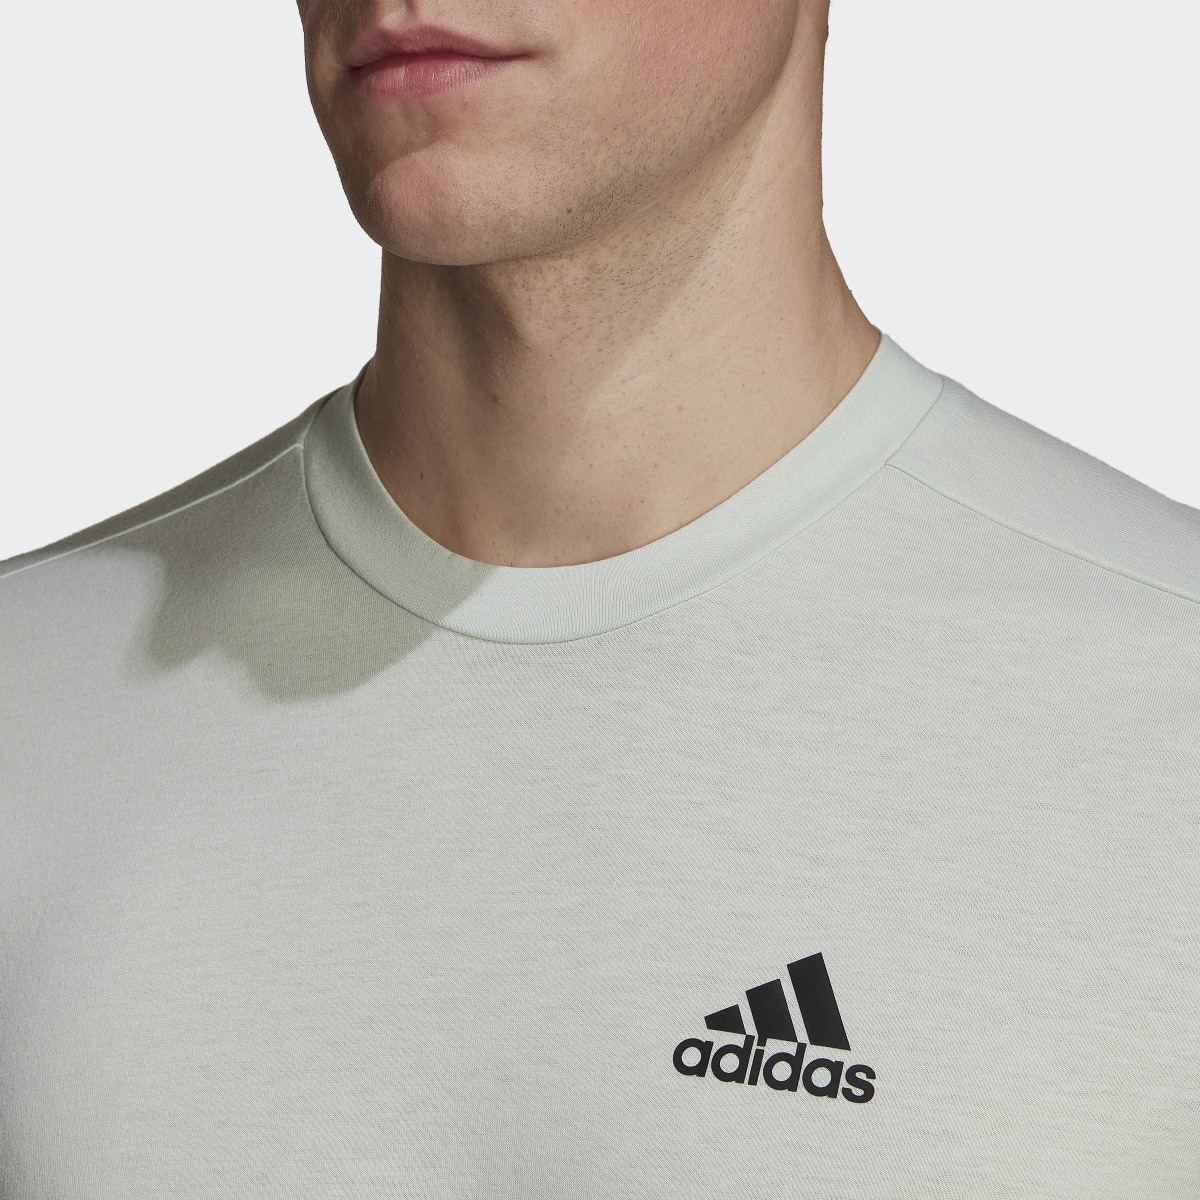 Adidas T-shirt AEROREADY Designed 2 Move Feelready Sport. 6